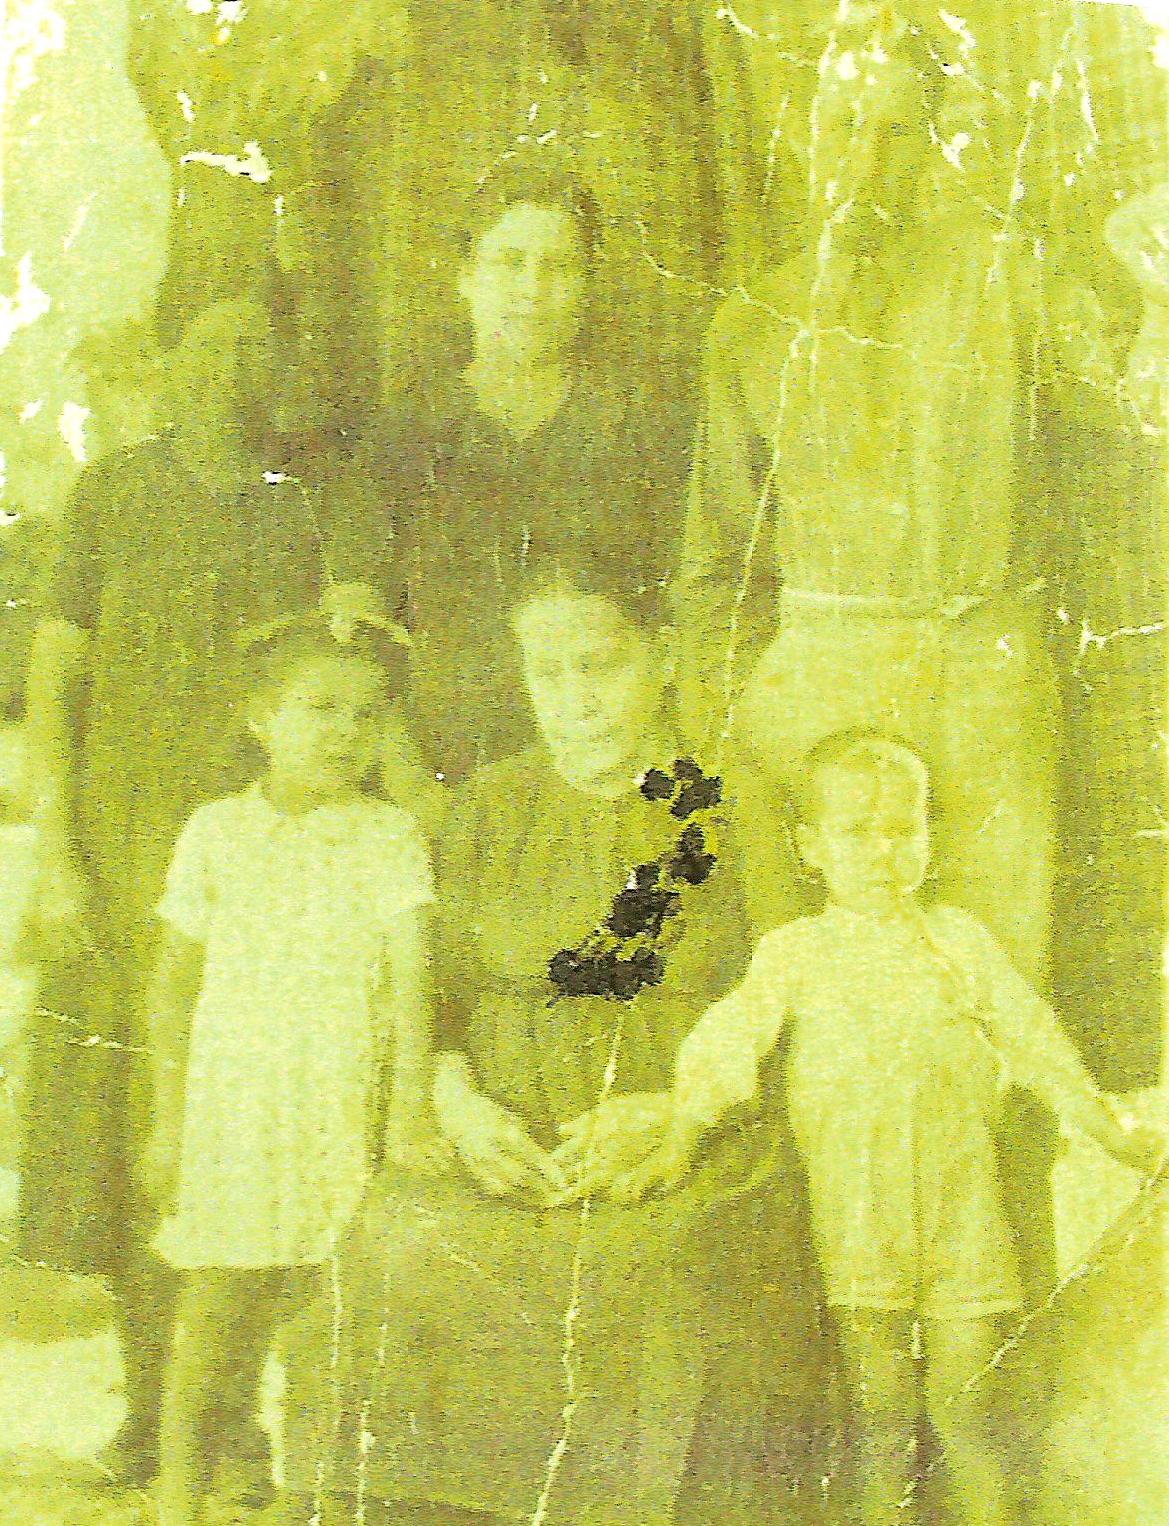 Dolores "La Jabonera" la primera a la izquierda junto a mis padres, la abuela Mara, mi hermana Maruja y yo